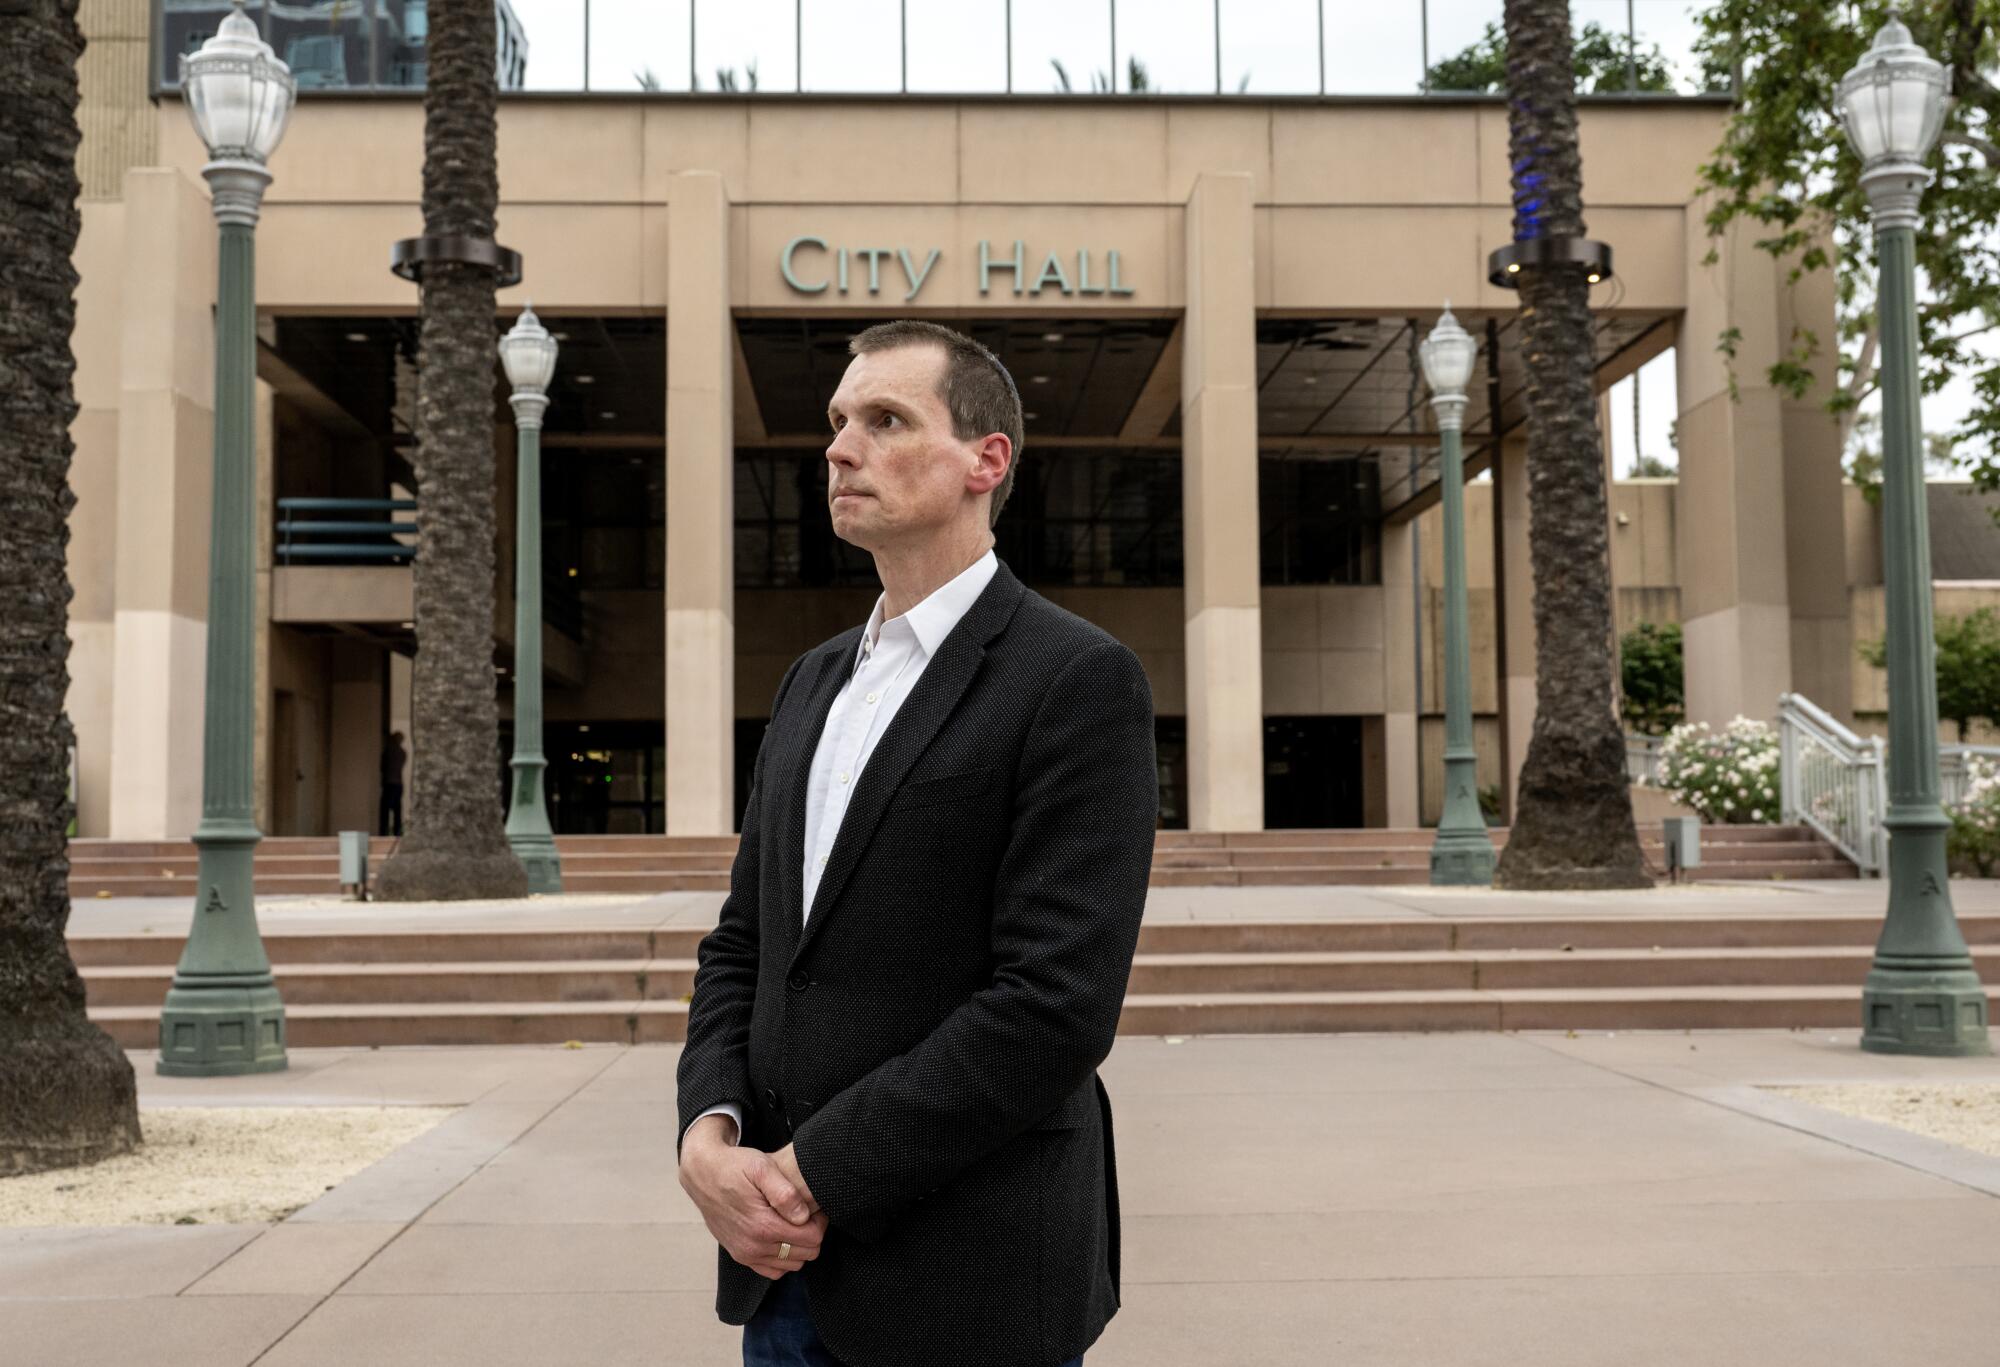 Former Anaheim Council Member Jordan Brandman stands in front of City Hall